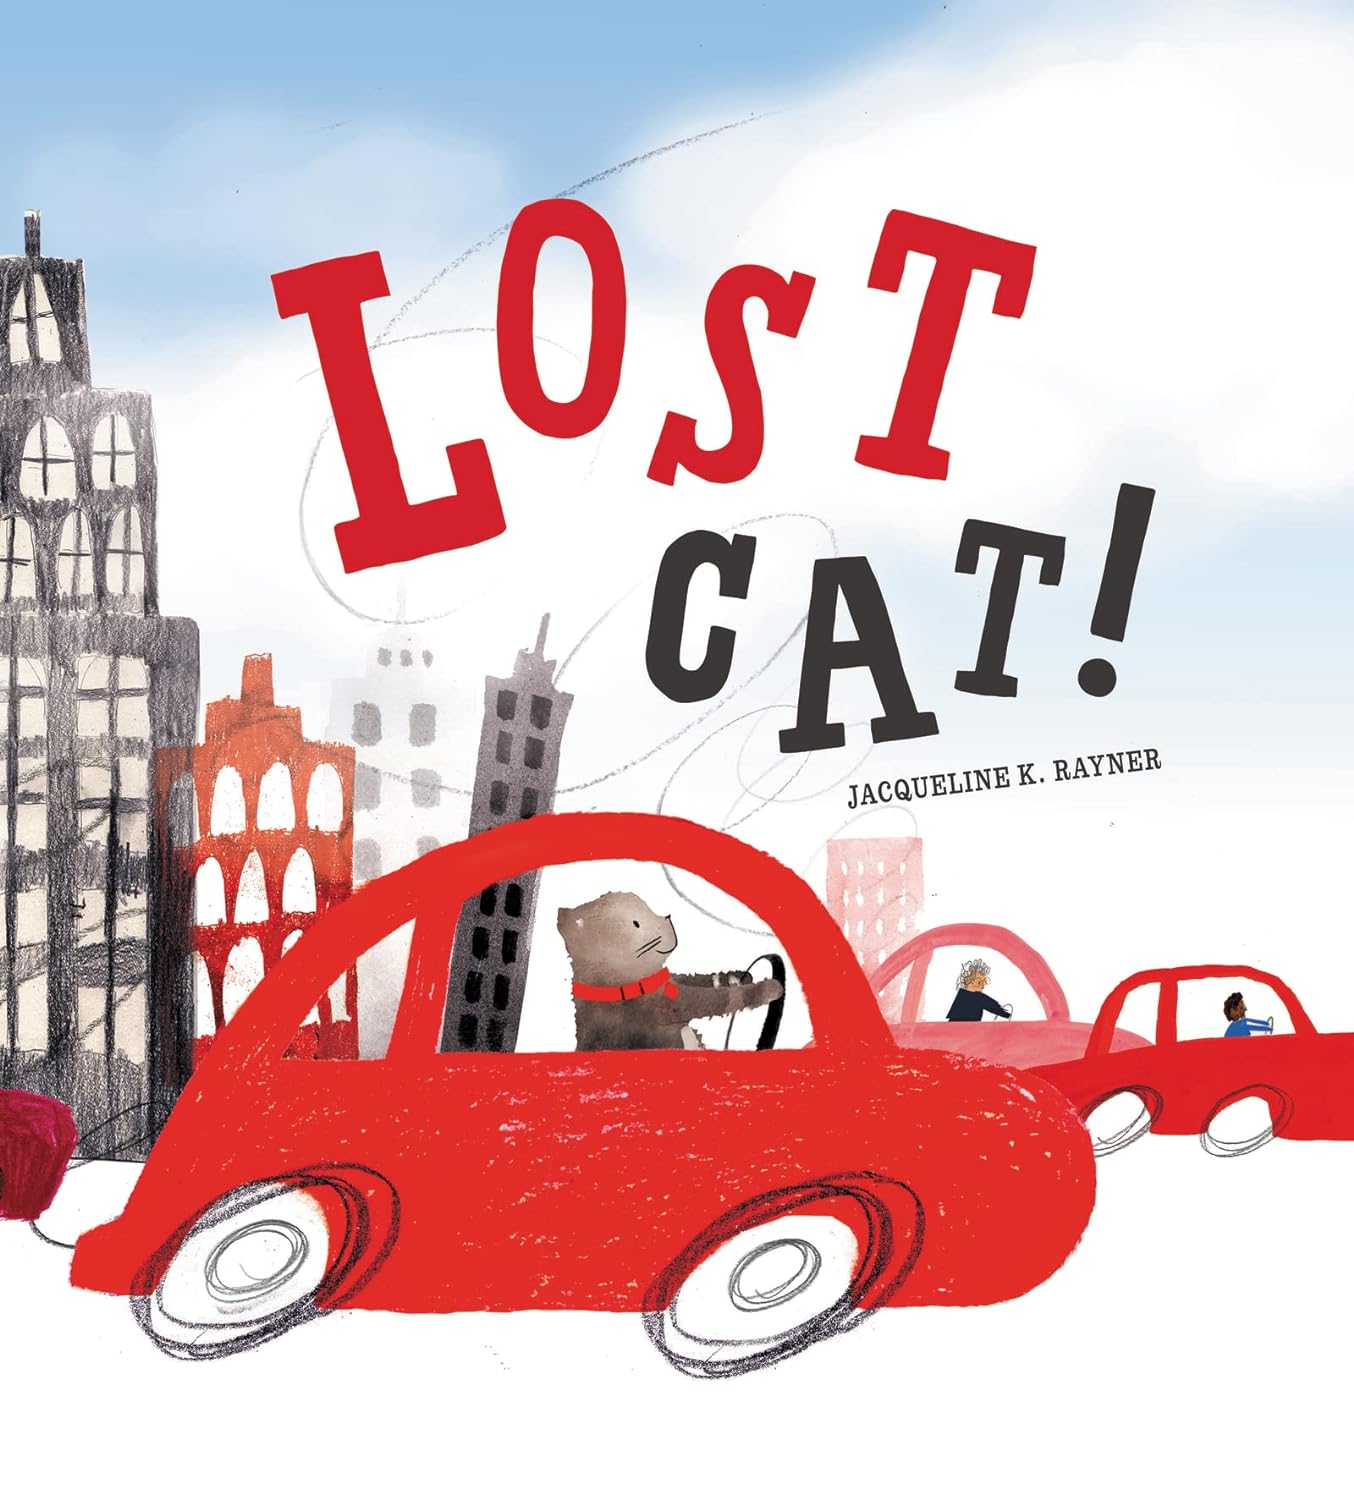 Lost Cat! (Hardcover)